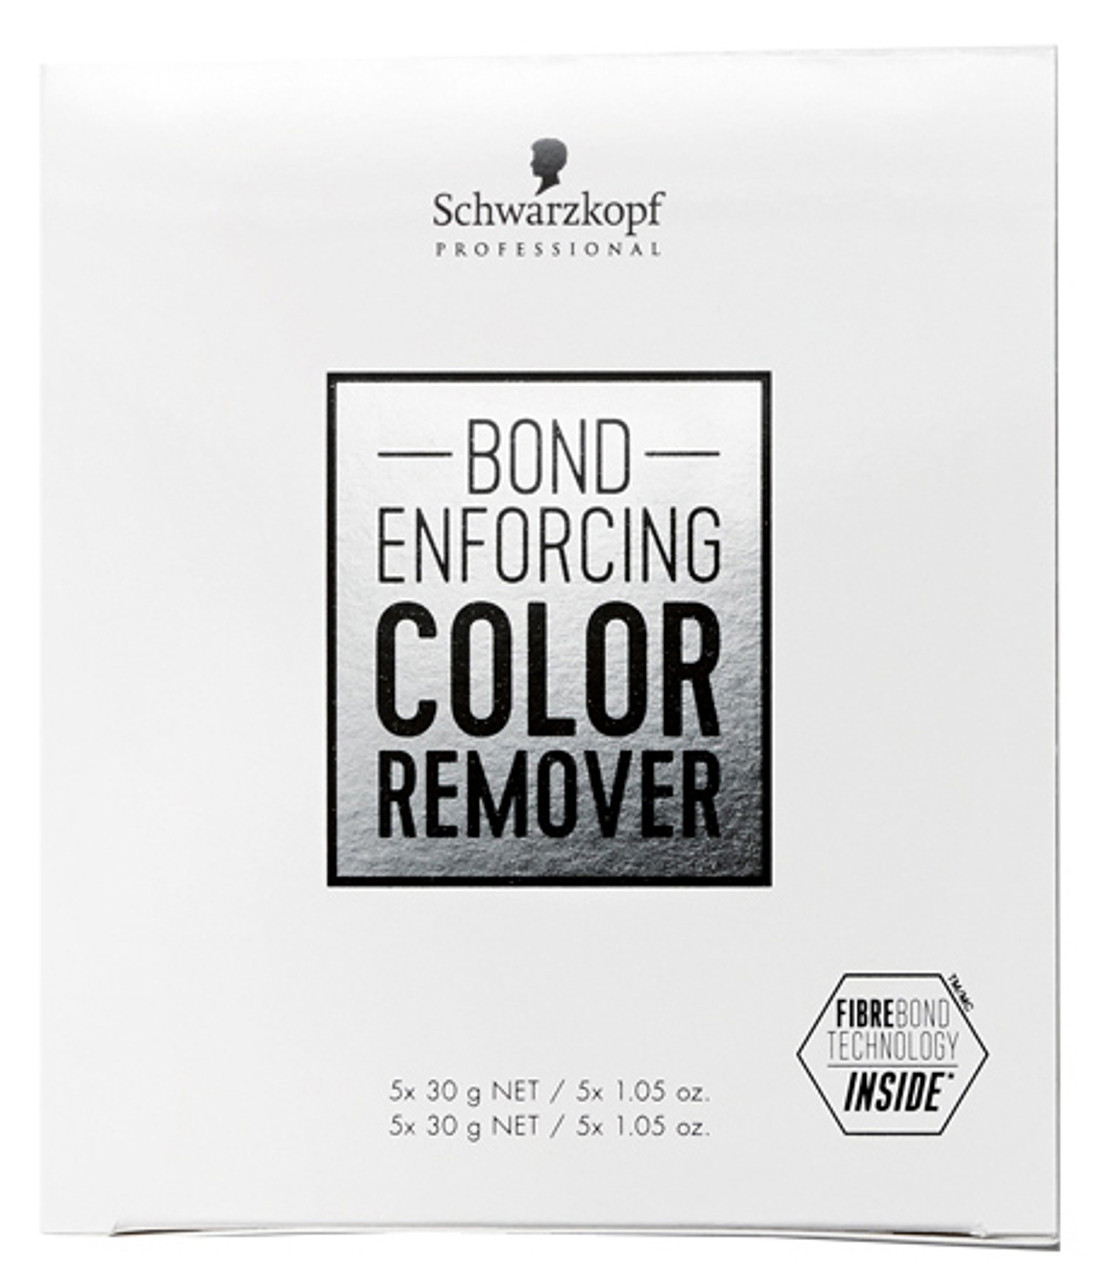 Schwarzkopf Professional Bond Enforcing Color Remover color remover